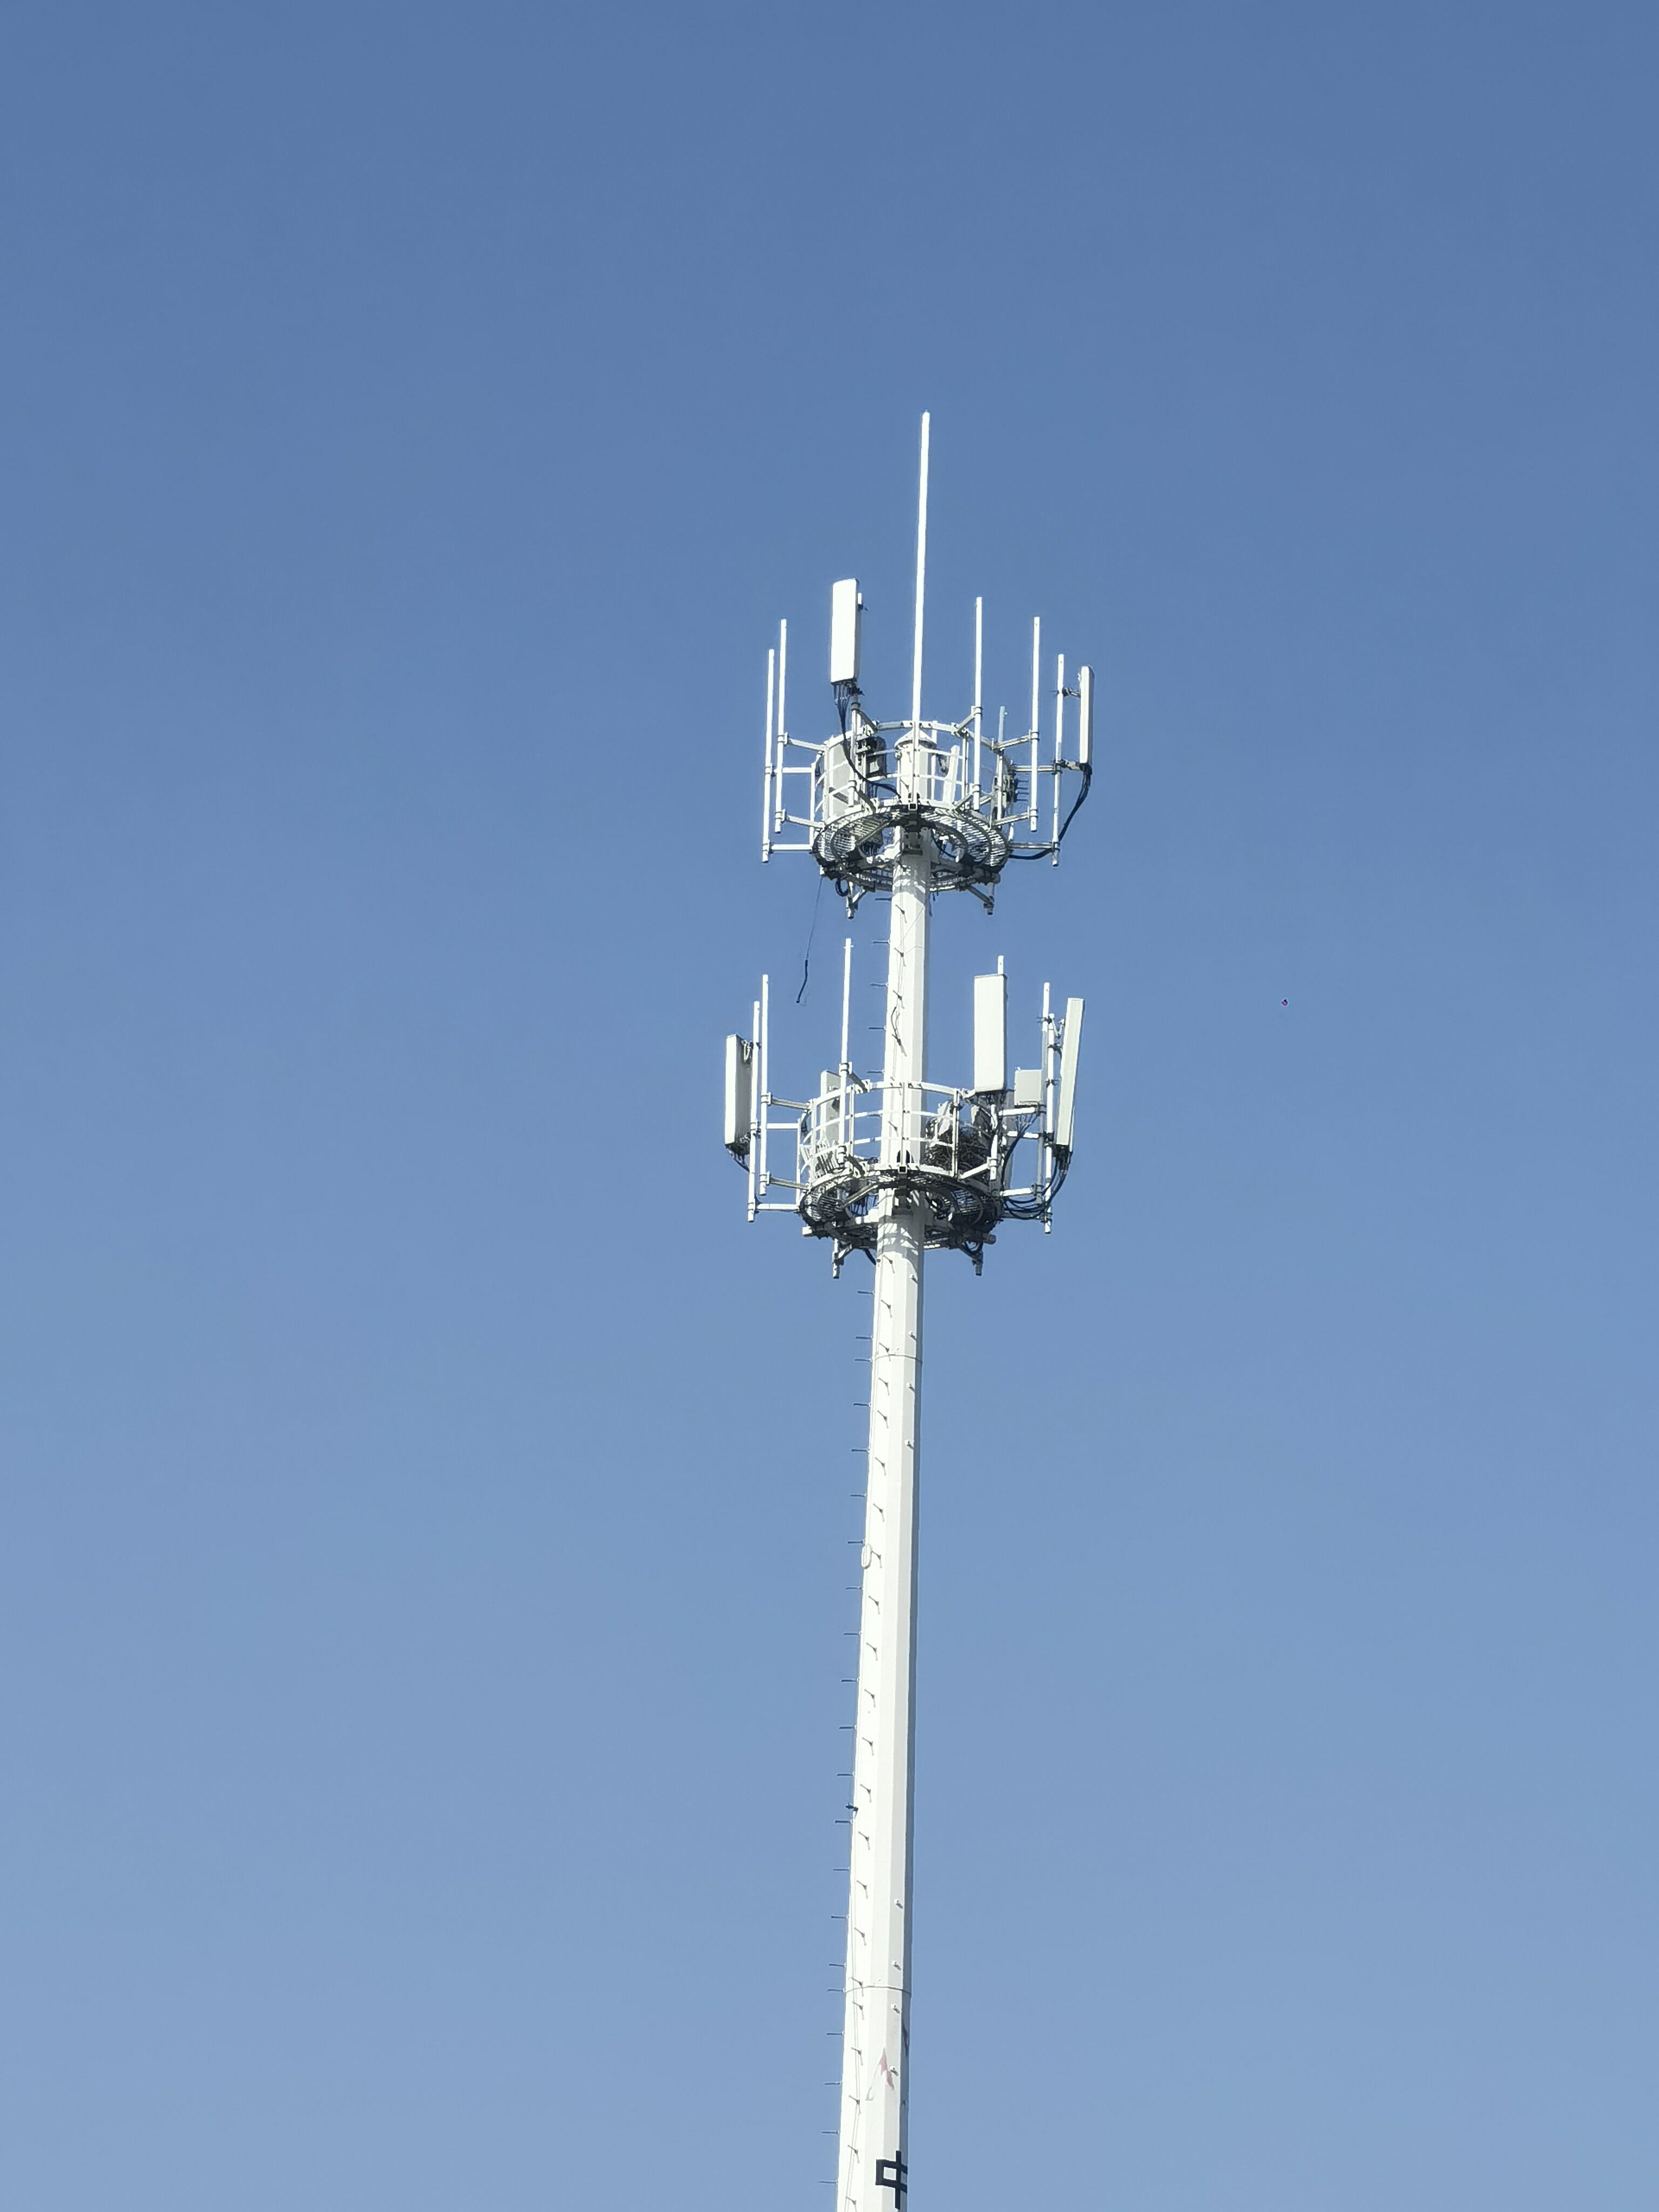 Monopole Tower Antenn Communication Transmission fabrik